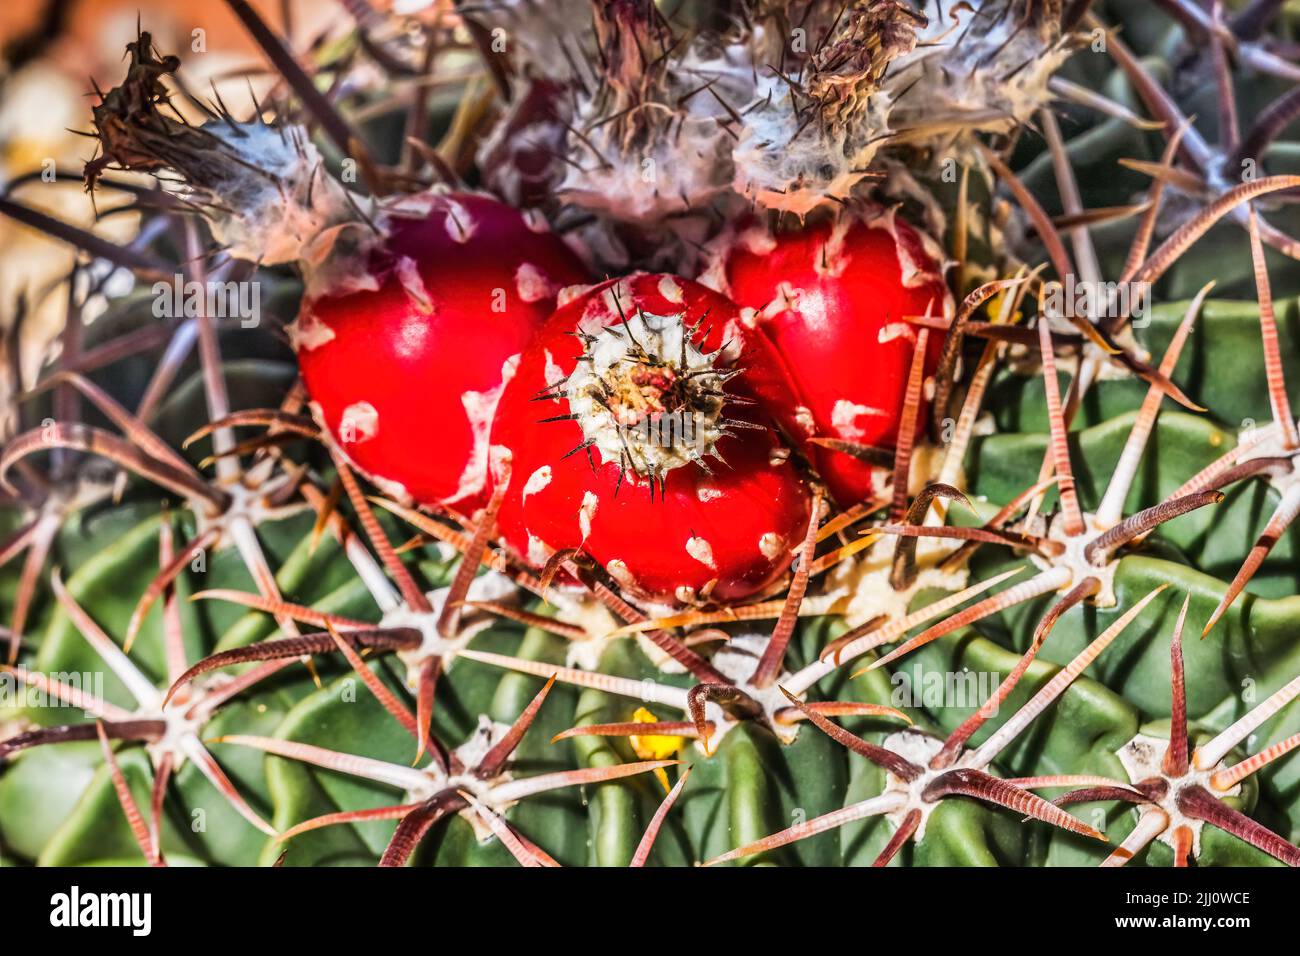 Colorful Red Cactus Plant Horsecrippler Desert Botanical Garden Tucson Arizona Garden created in the 1960s Stock Photo